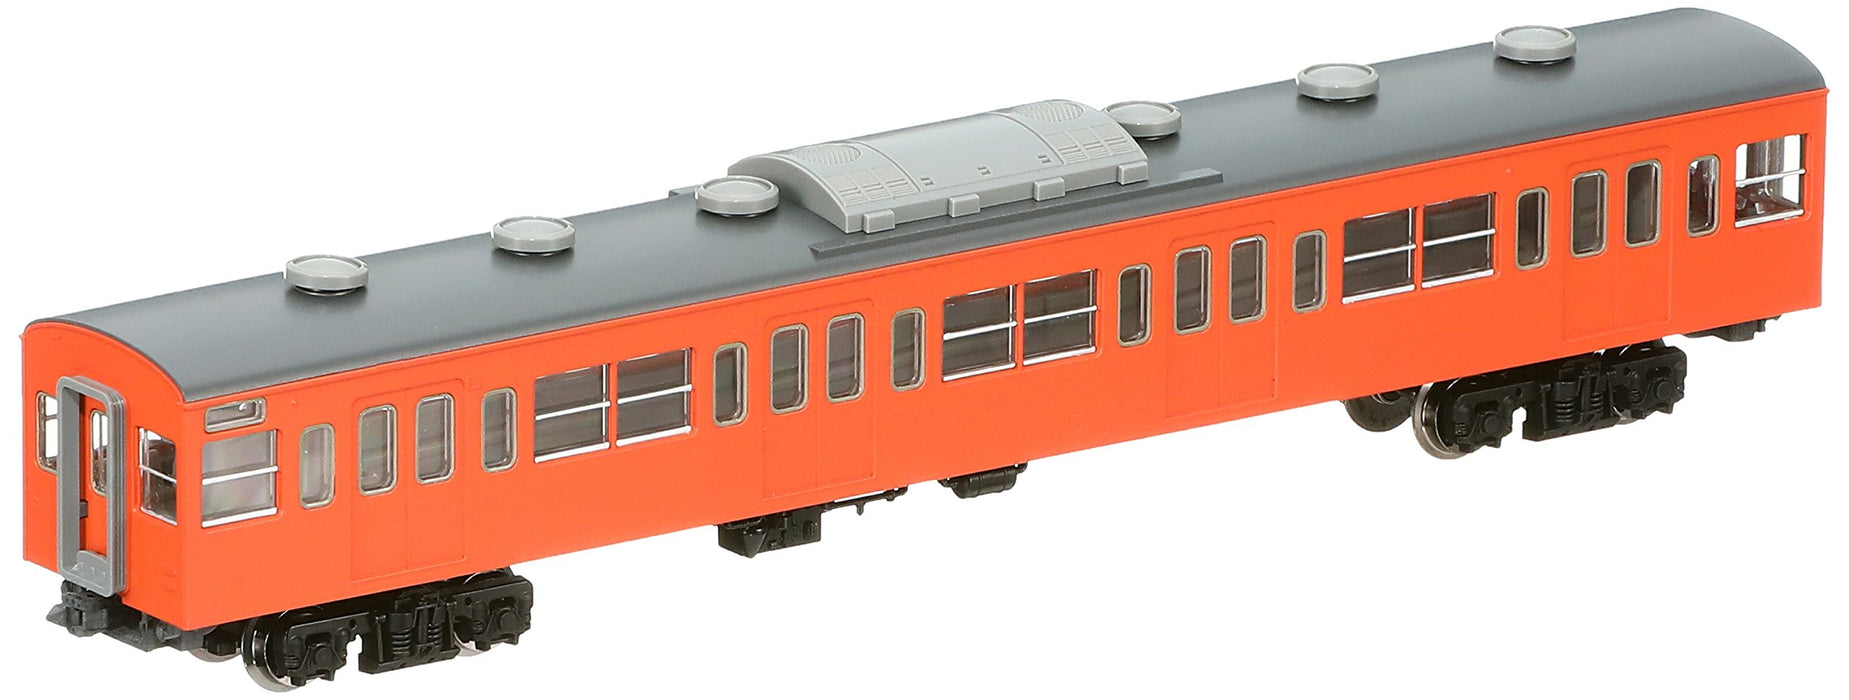 Tomytec Tomix N Gauge Saha 103 Early Orange 9301 Railway Model Train